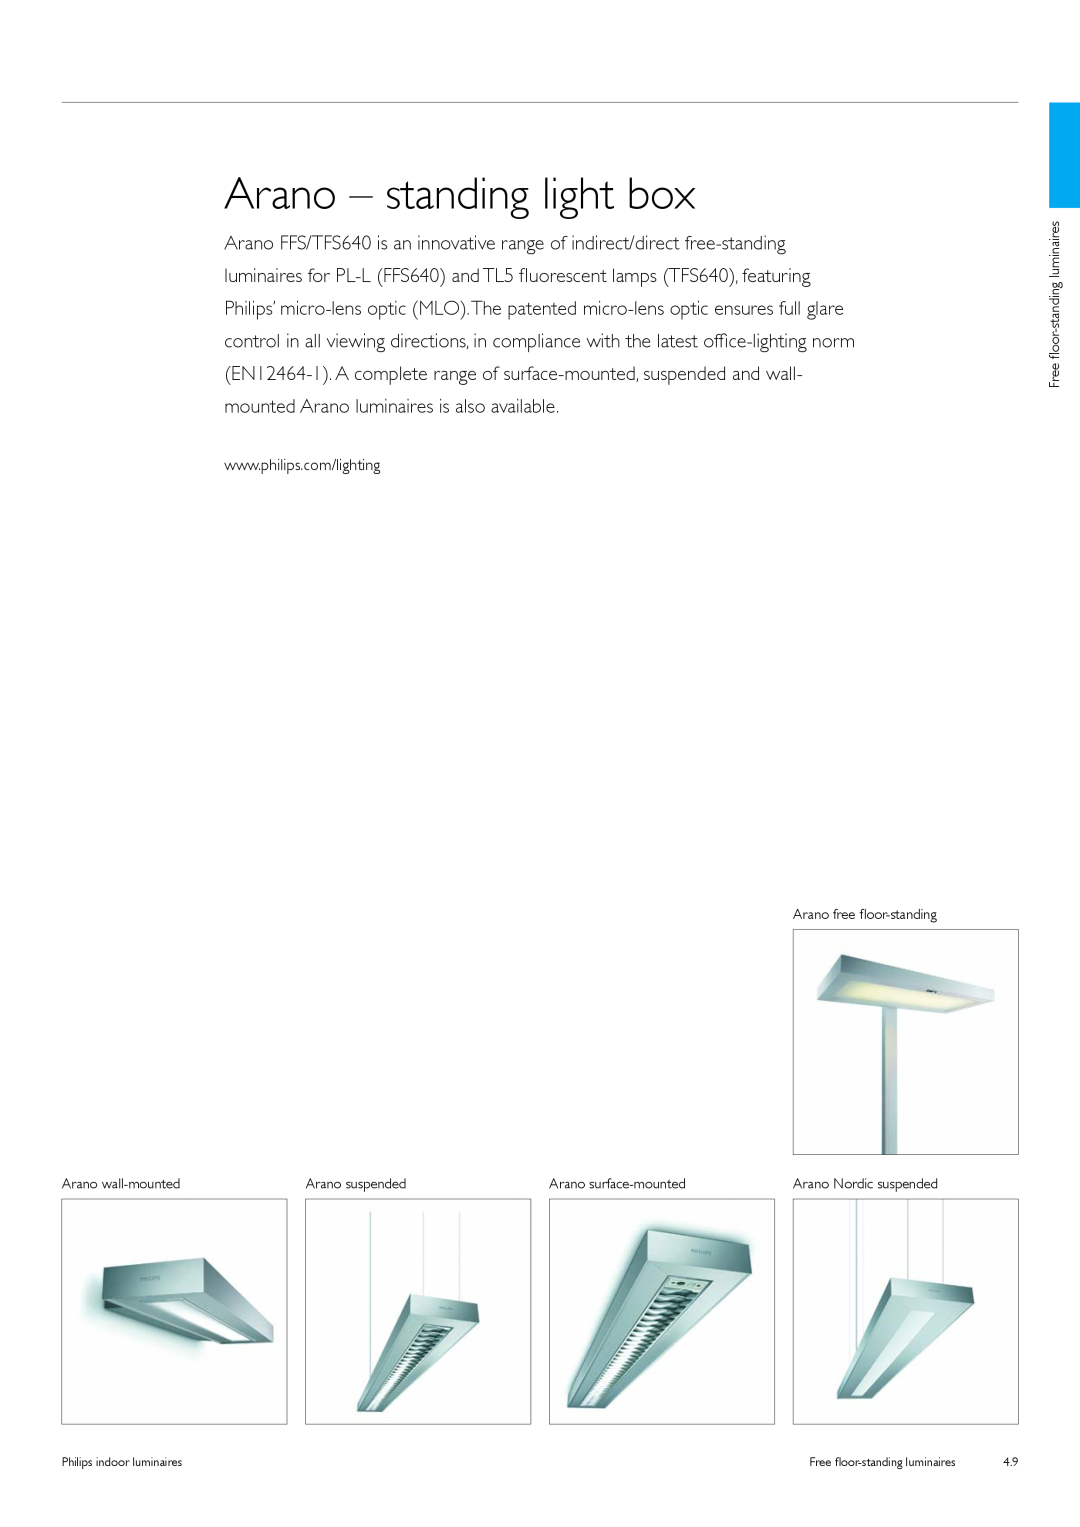 Philips Free Floor-Standing Luminaires manual Arano - standing light box, Arano free floor-standing, Arano wall-mounted 